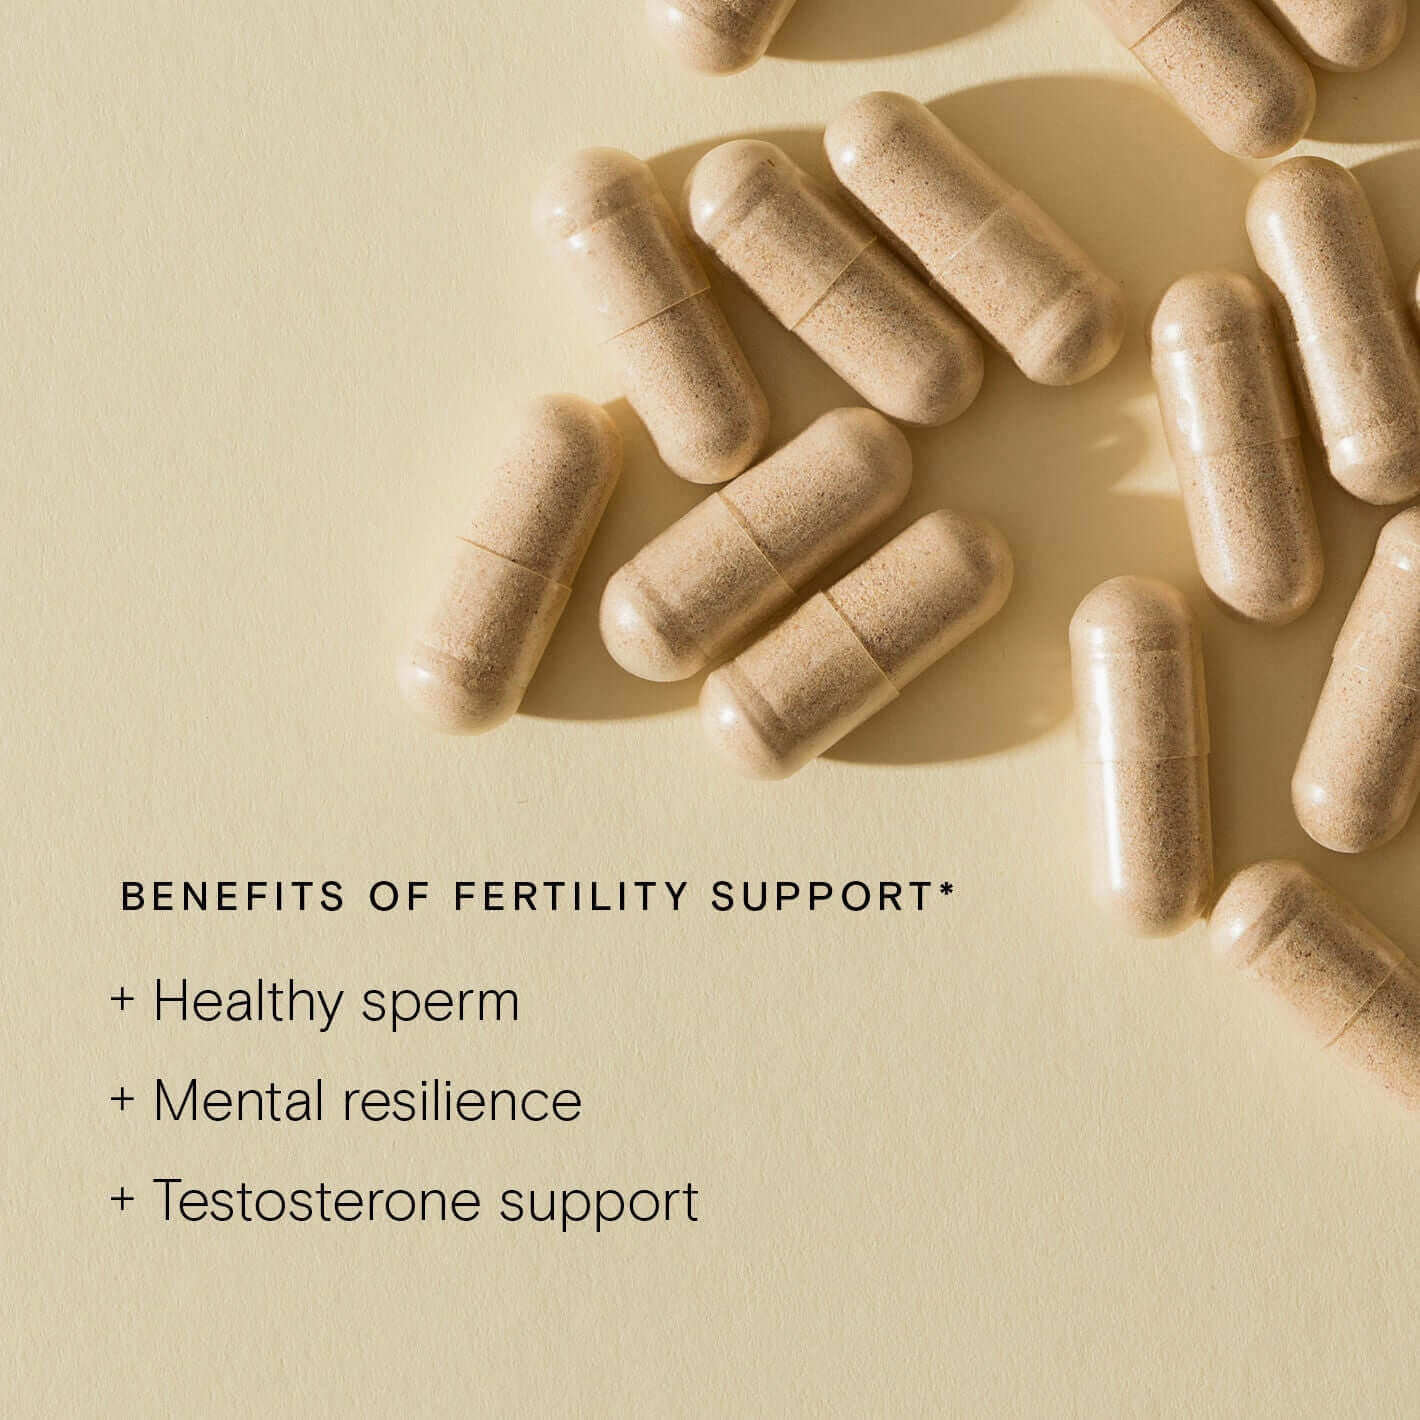 Food-Grown® Fertility Support for Men